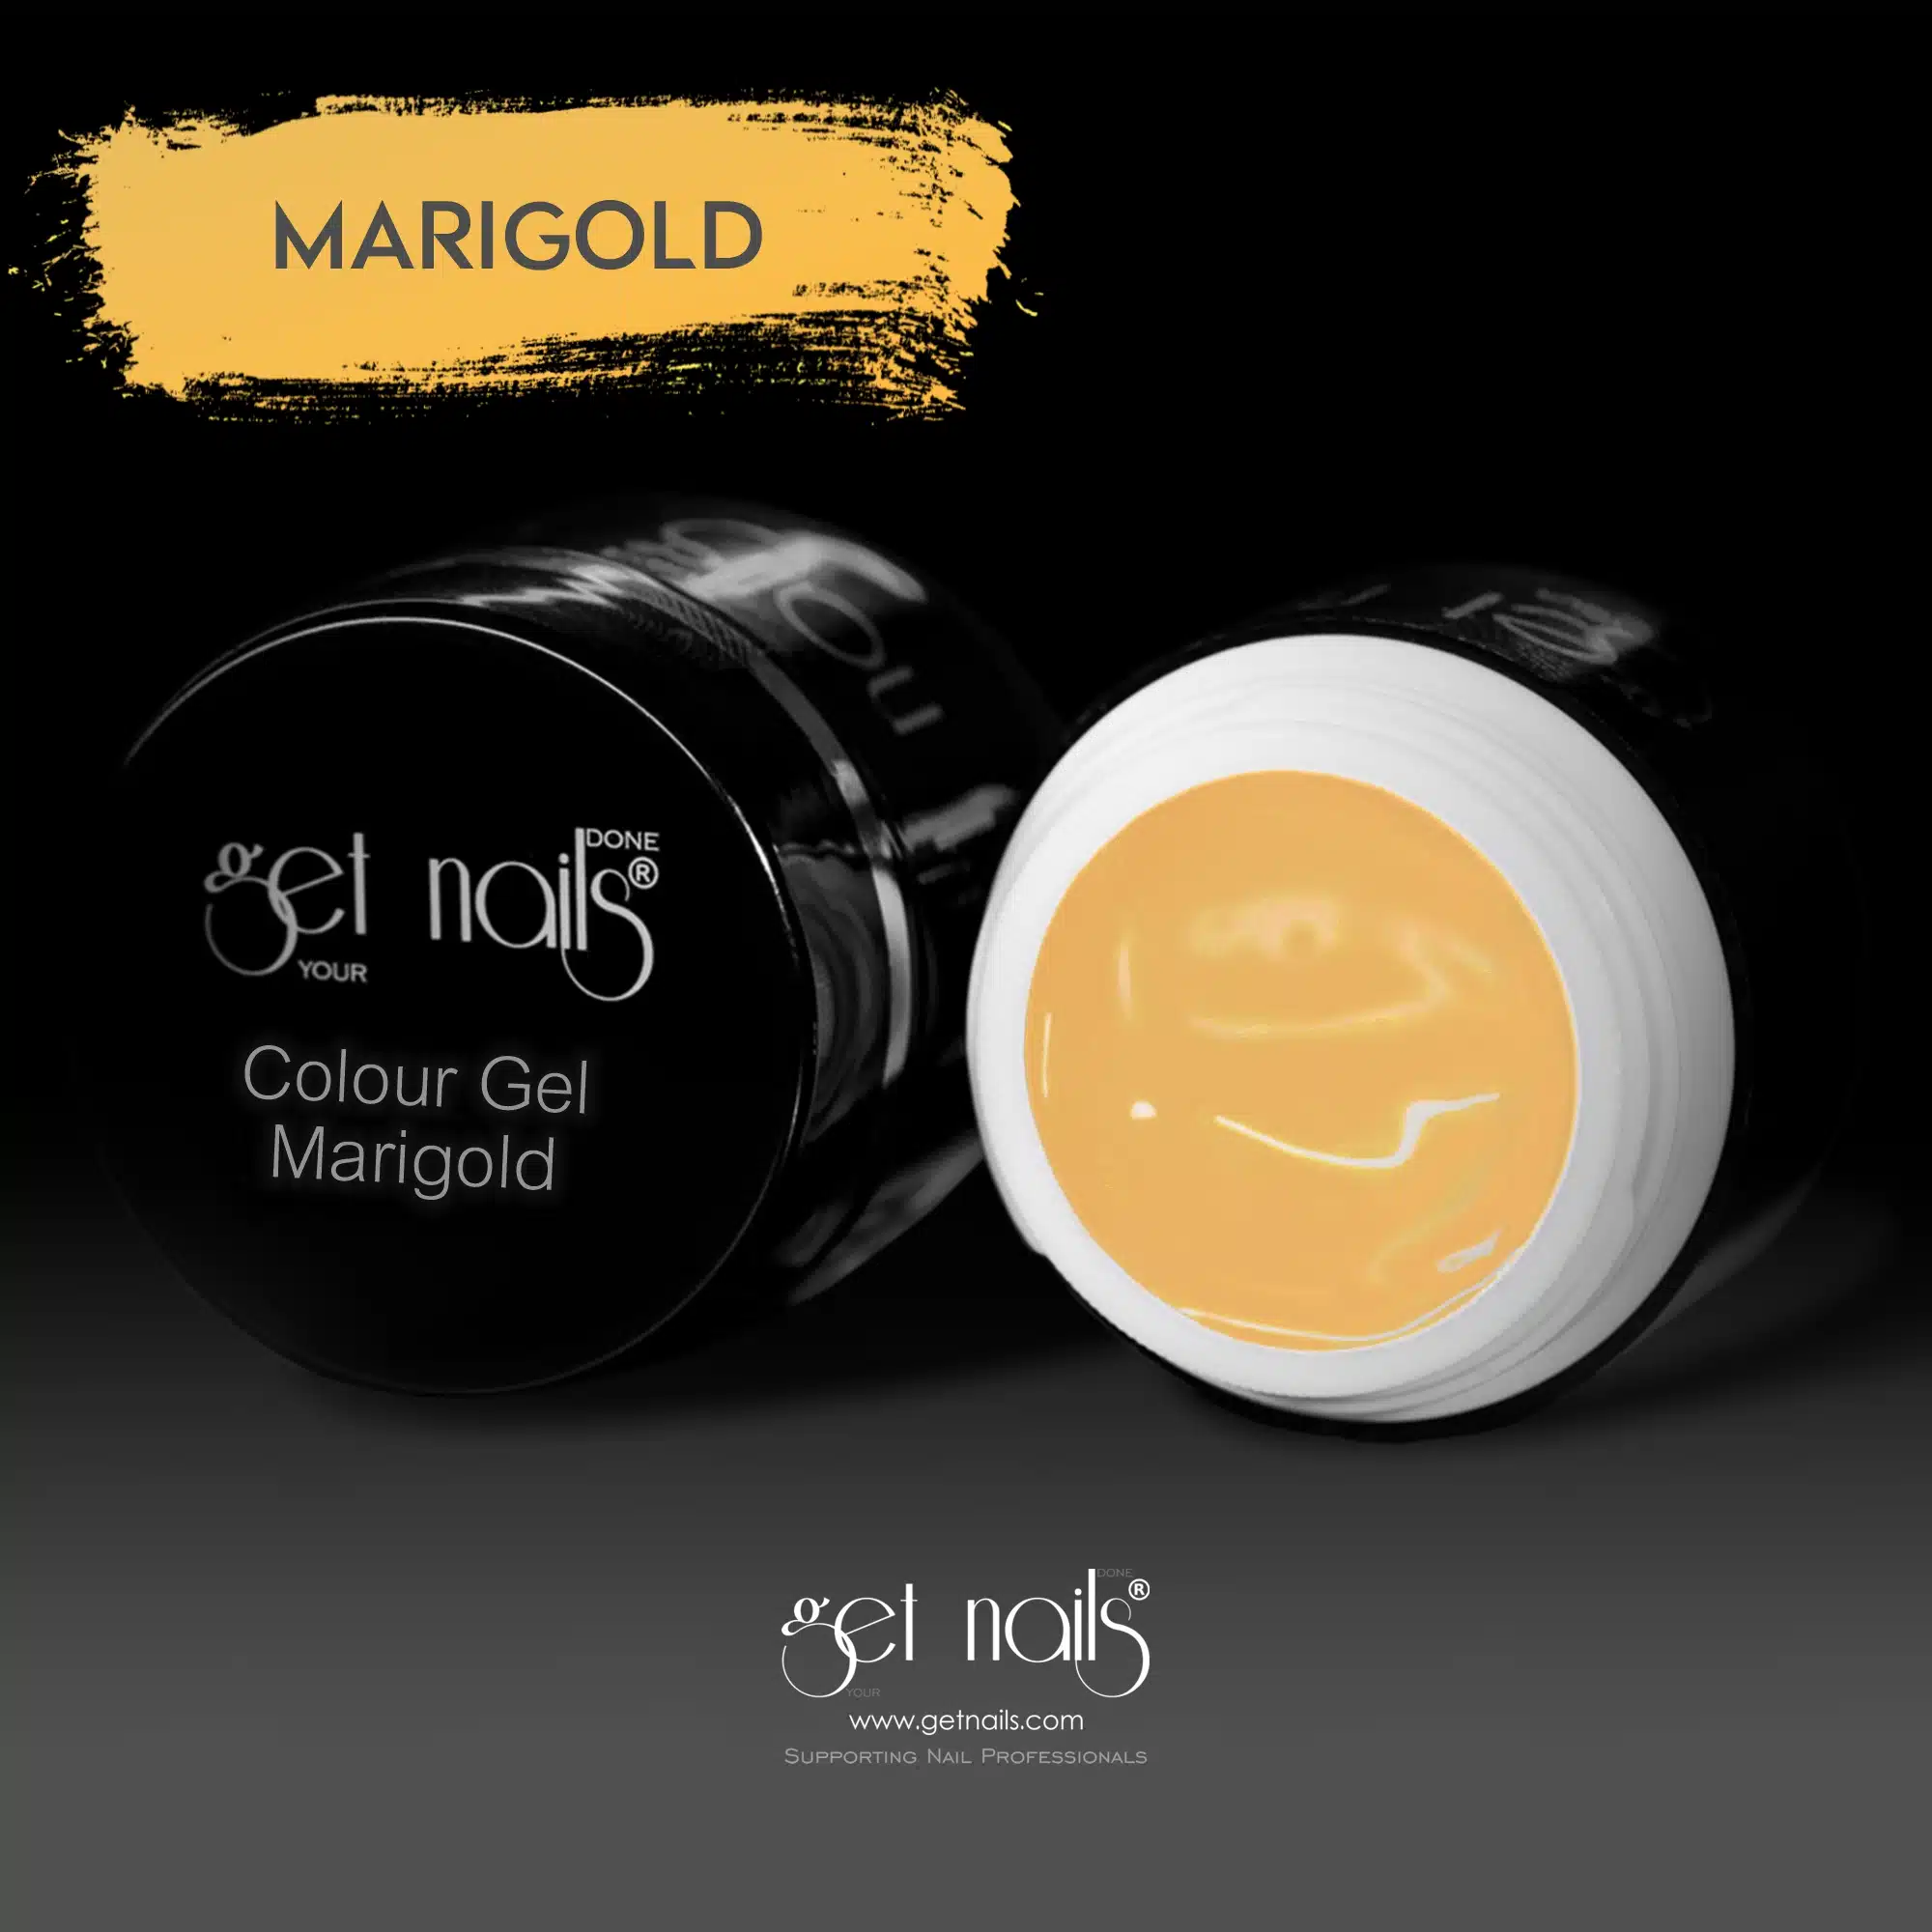 Get Nails Austria - Color Gel Marigold 5g